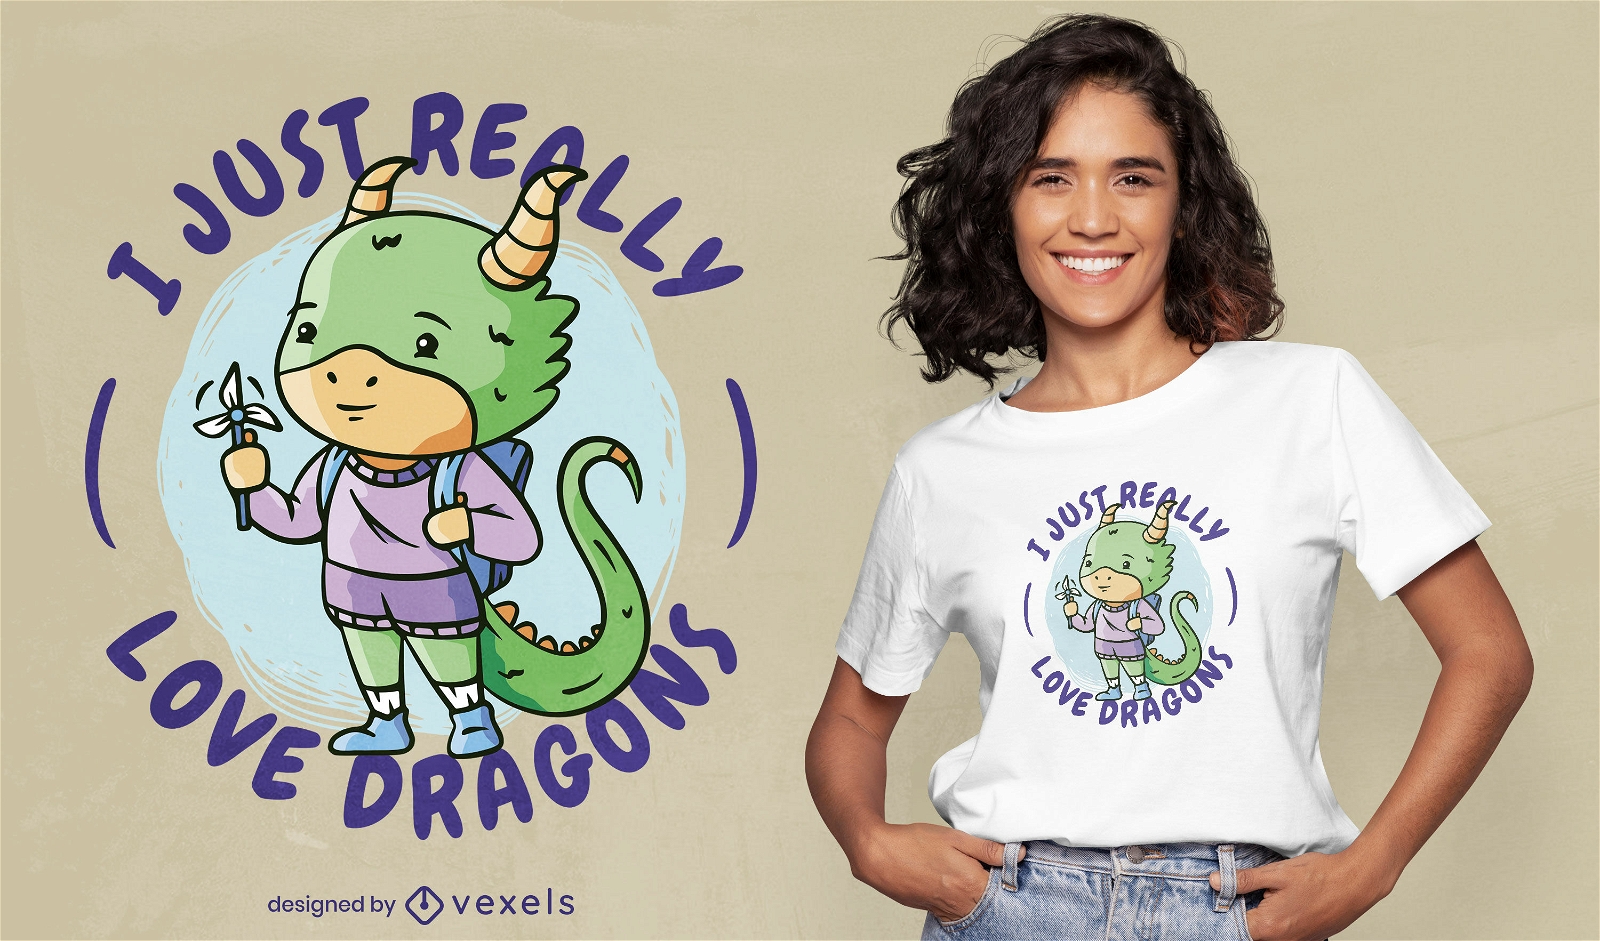 Precioso dise?o de camiseta con cita de dragones.